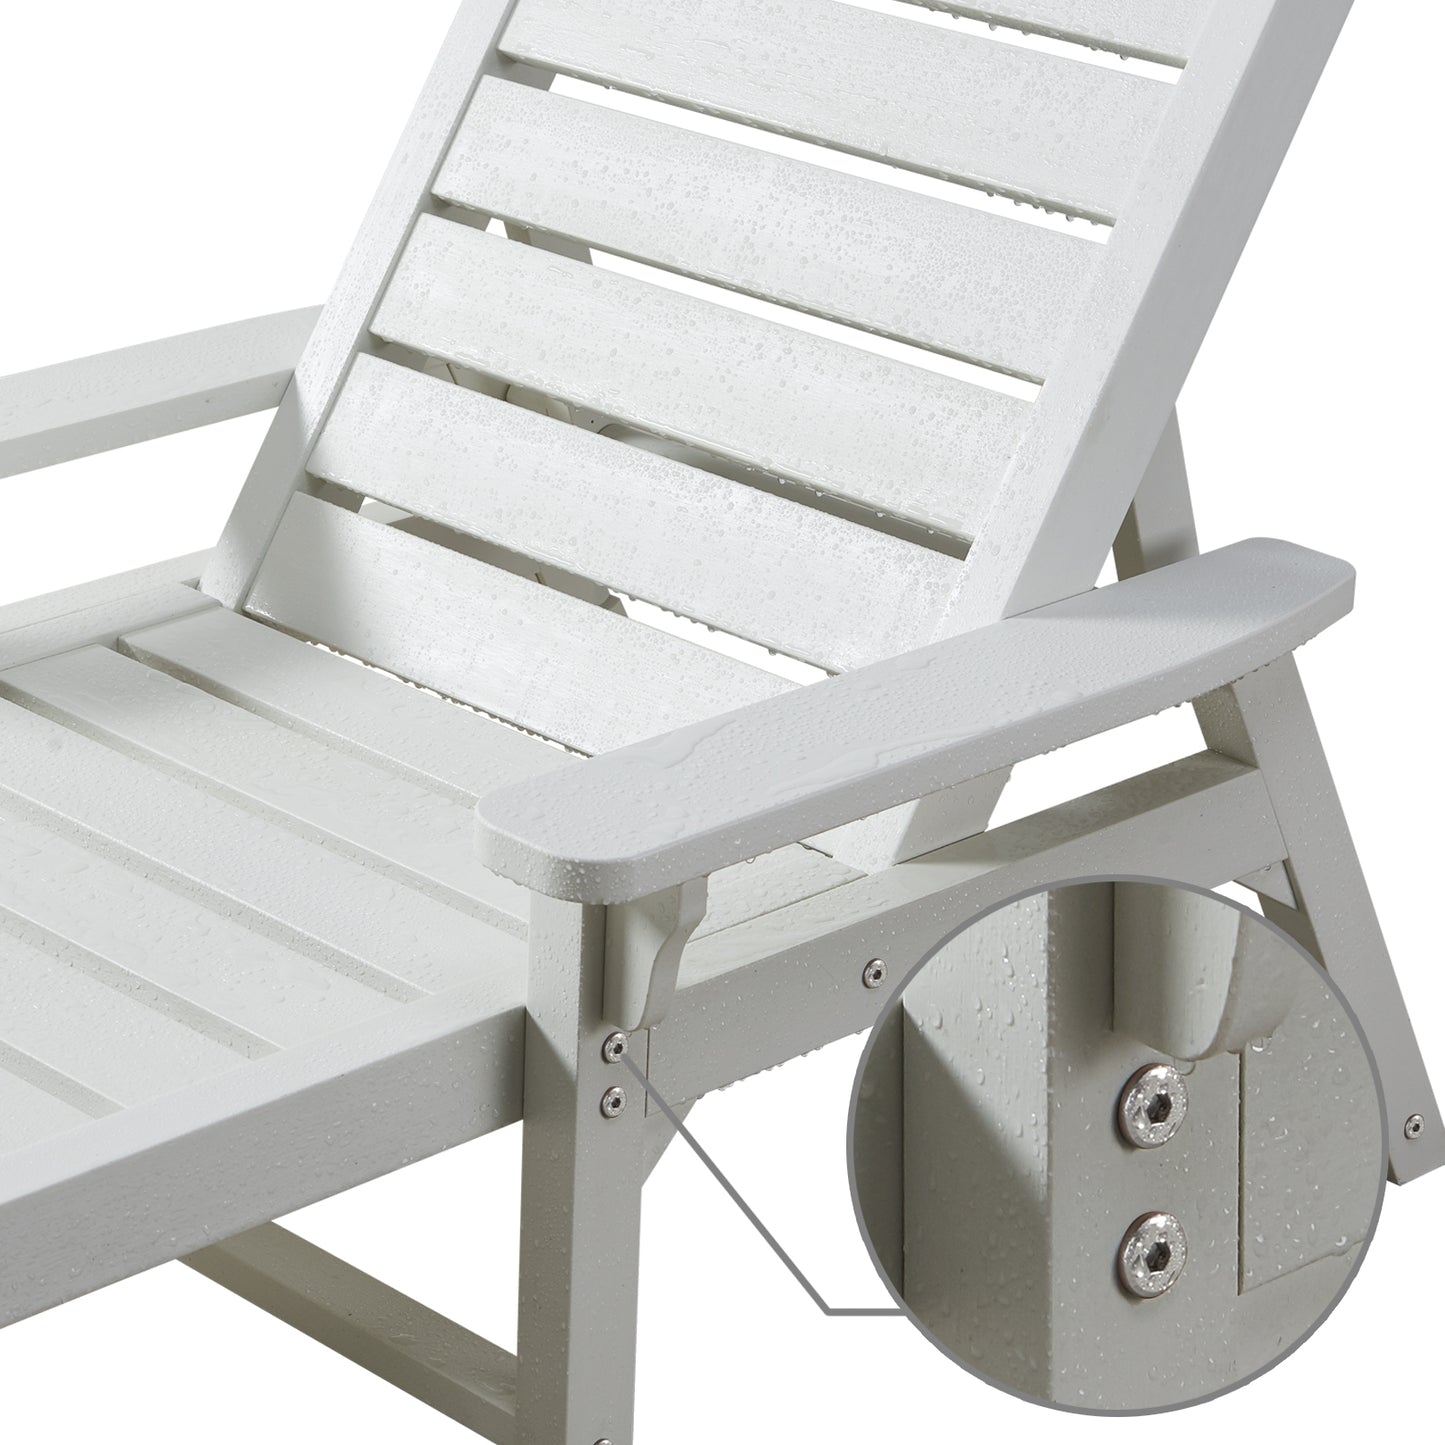 Psilvam Outdoor Chaise Lounge